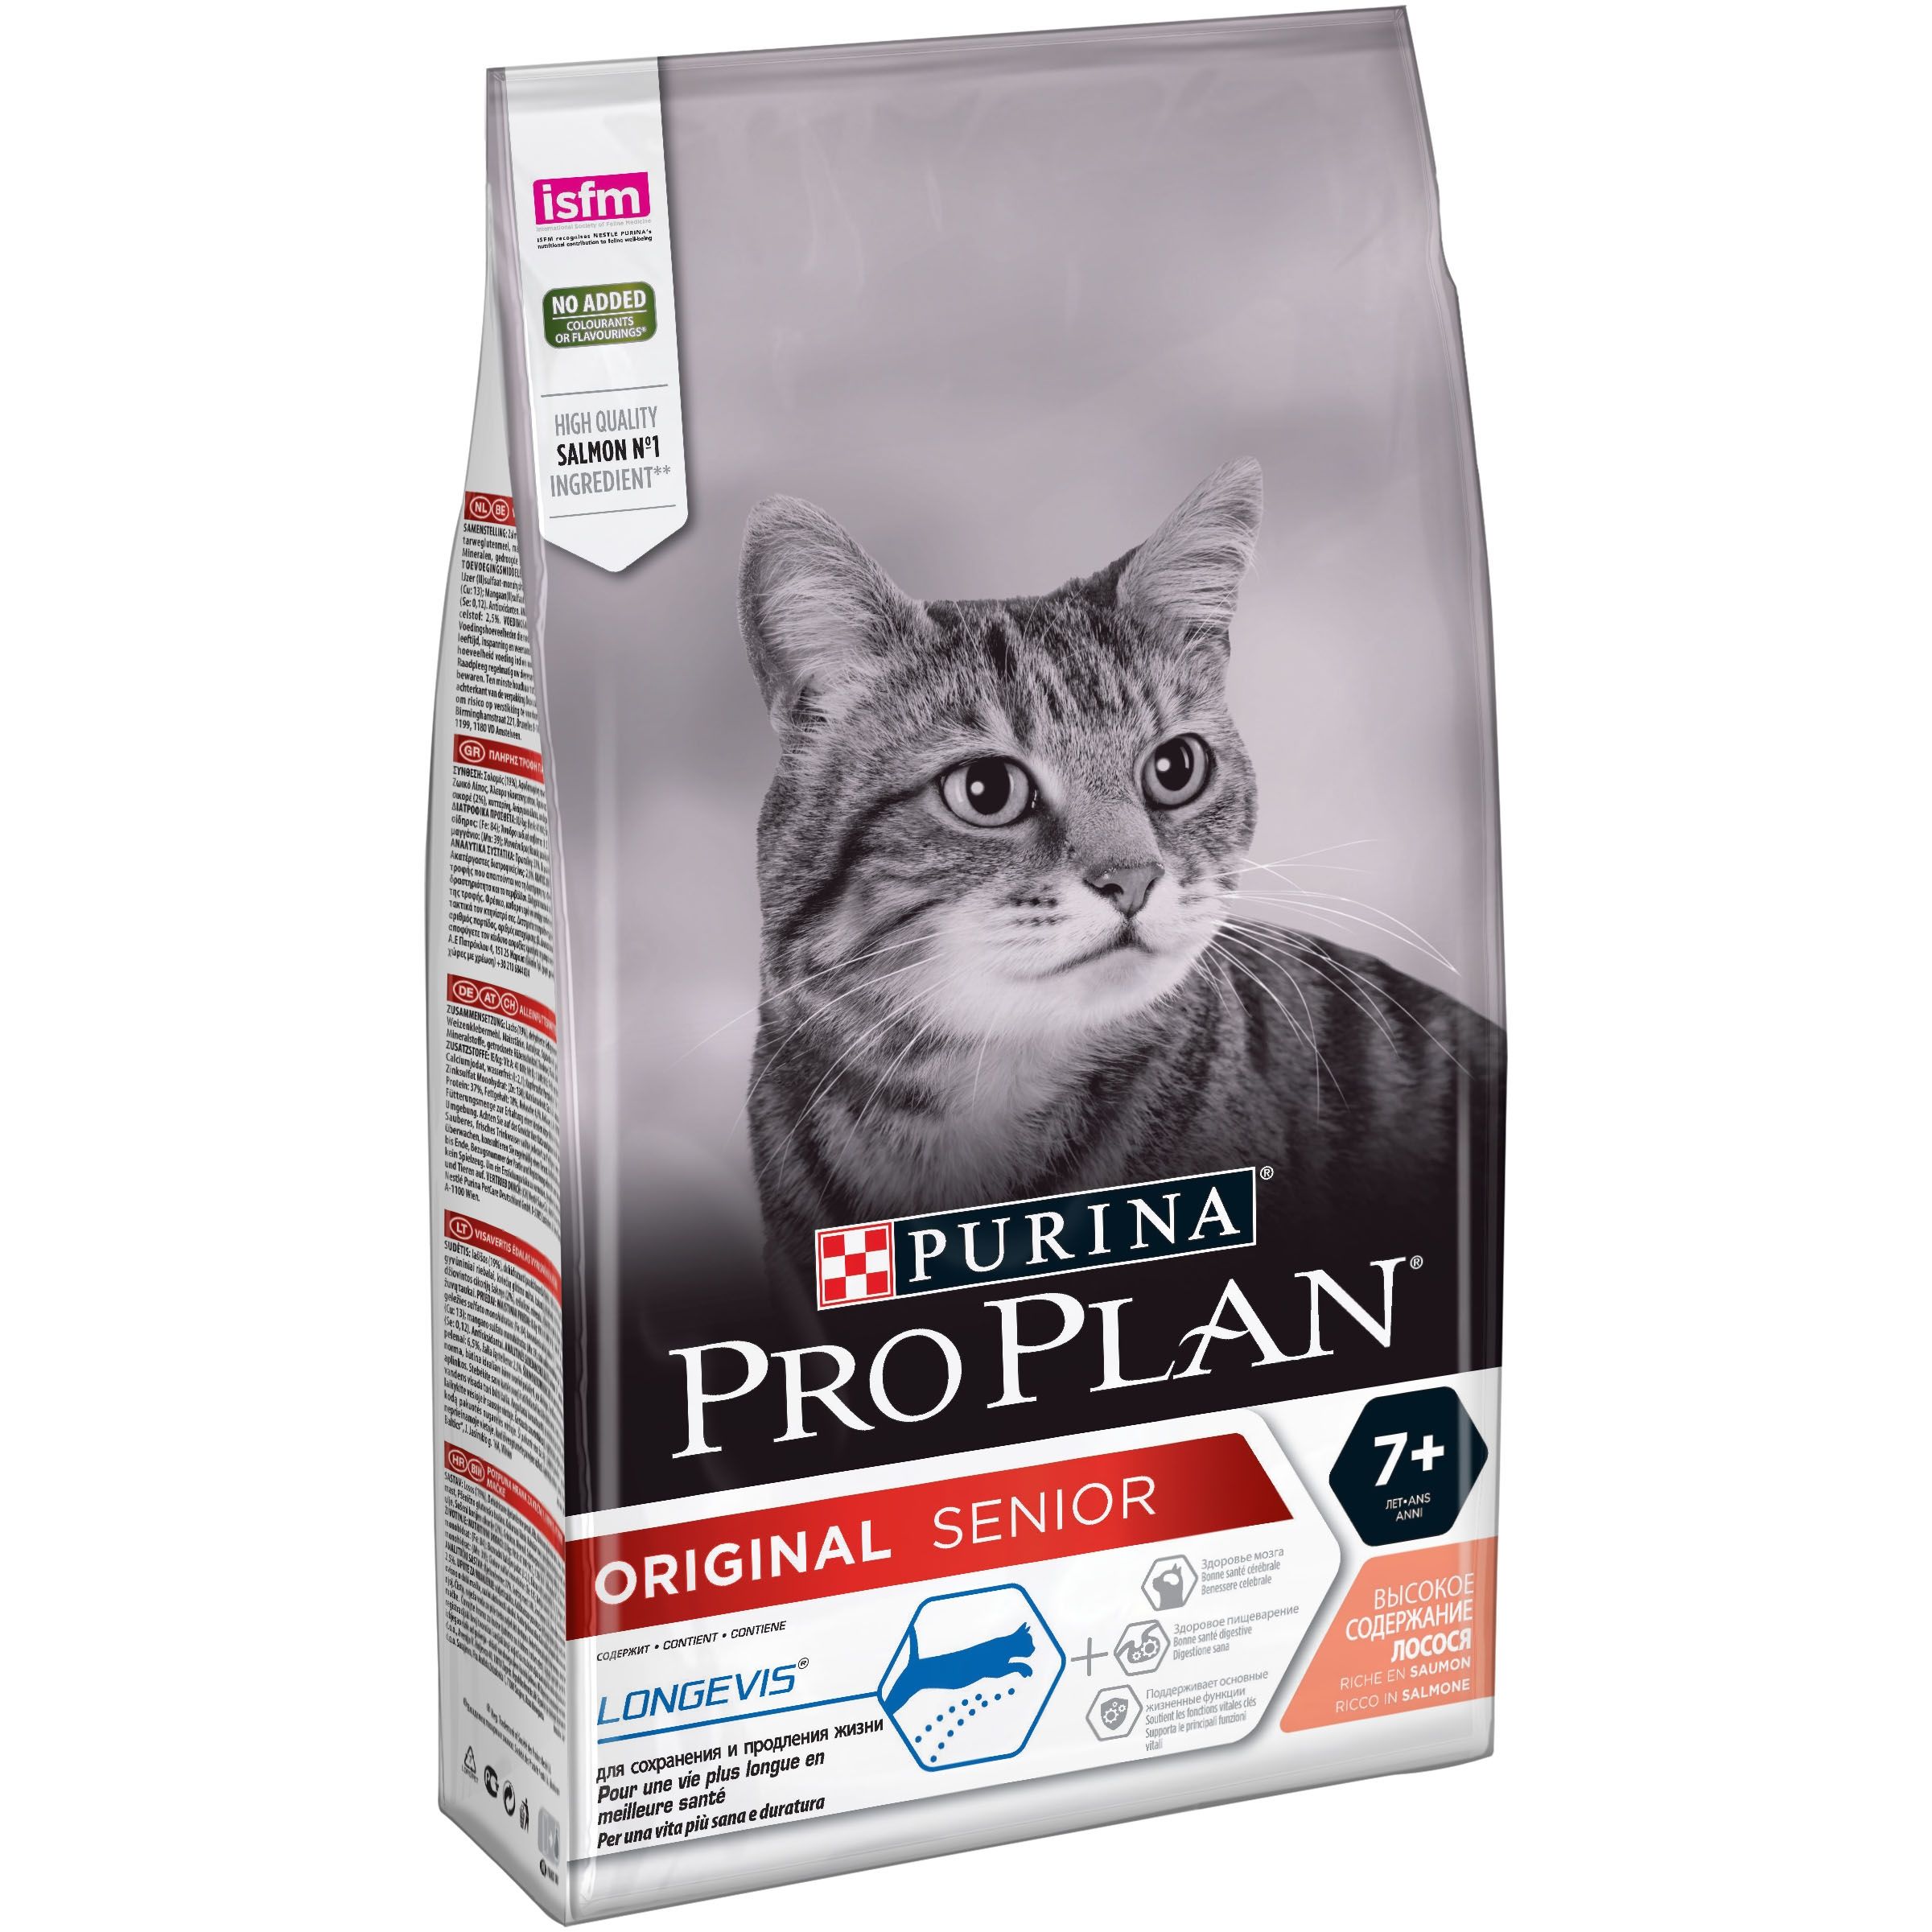 Pro Plan Sterilised 7+. Корм для кошек Пурина Проплан для стерилизованных. Корм "Pro Plan" Sterilised для стерилизованных кошек 1.5кг. Корм для котят Purina Pro Plan delicate с индейкой 1.5 кг. Pro plan для стерилизованных котов